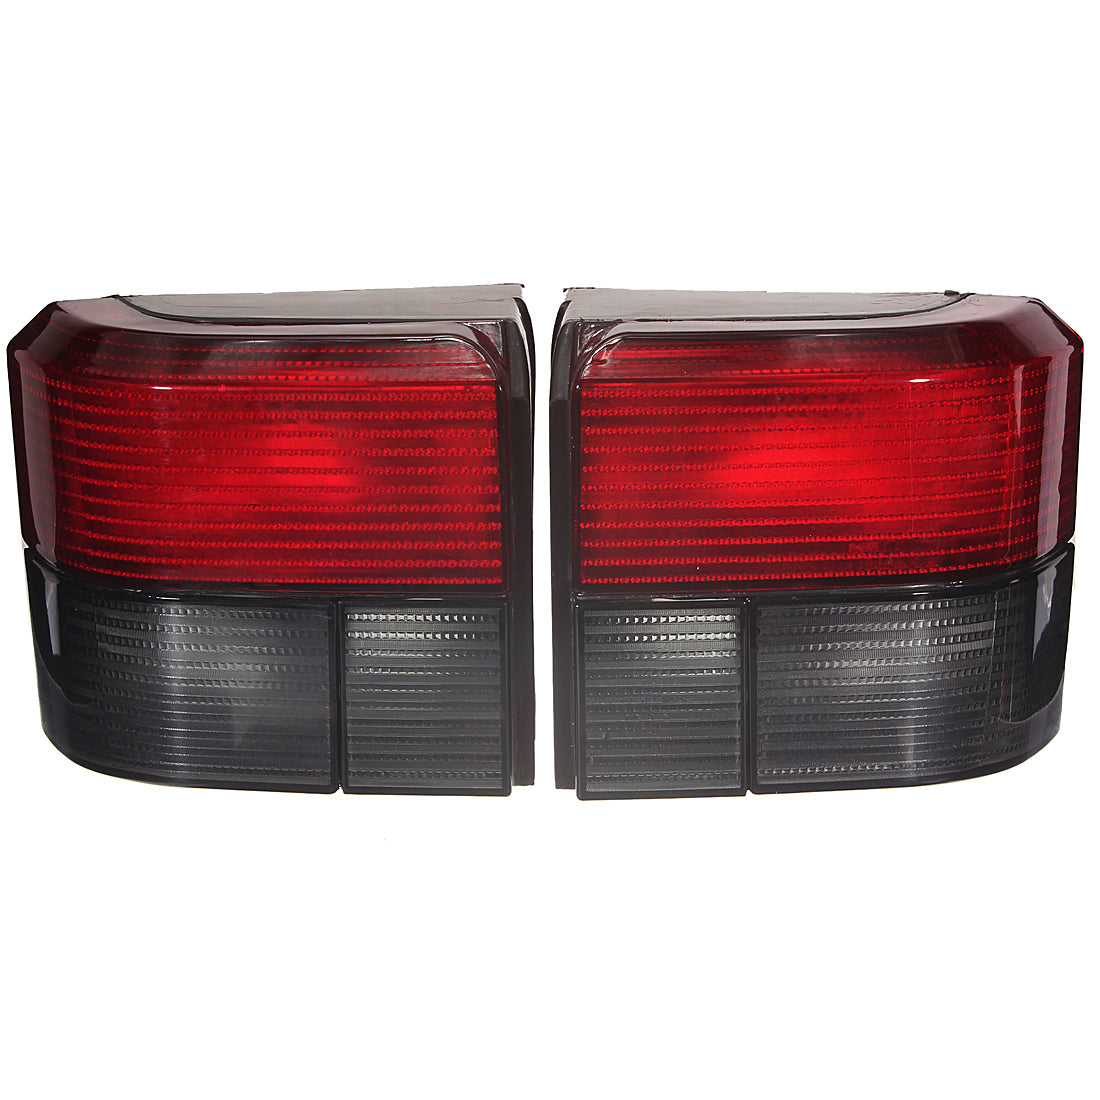 Brown Smoke Red Car Tail Light Brake Lamps Left/Right for VW Transporter Caravelle T4 1991-2003